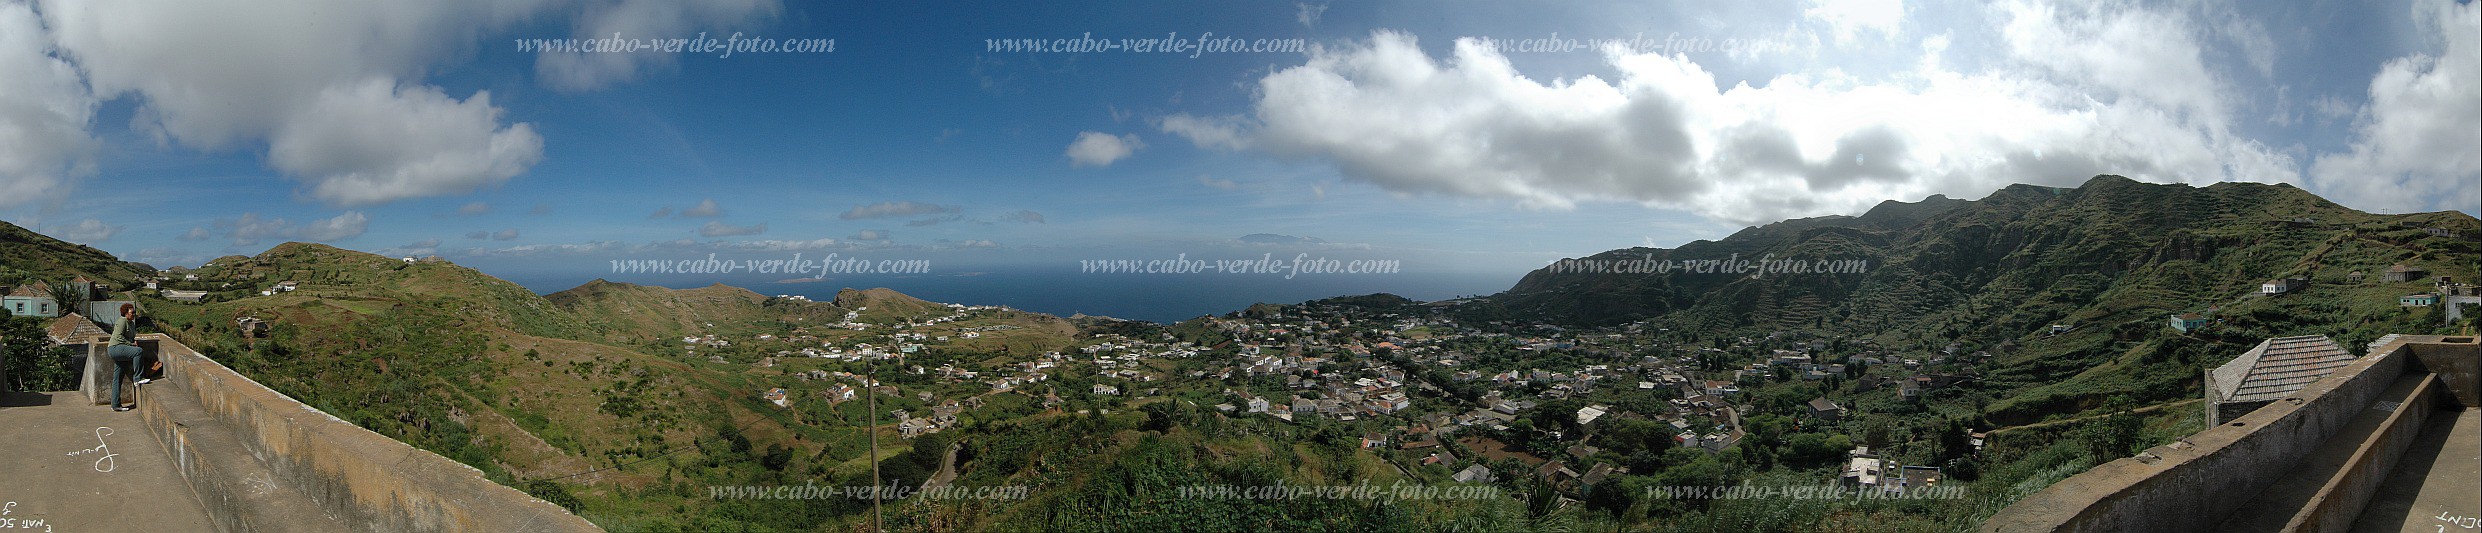 Brava : Vila Nova Sintra : vila : LandscapeCabo Verde Foto Gallery